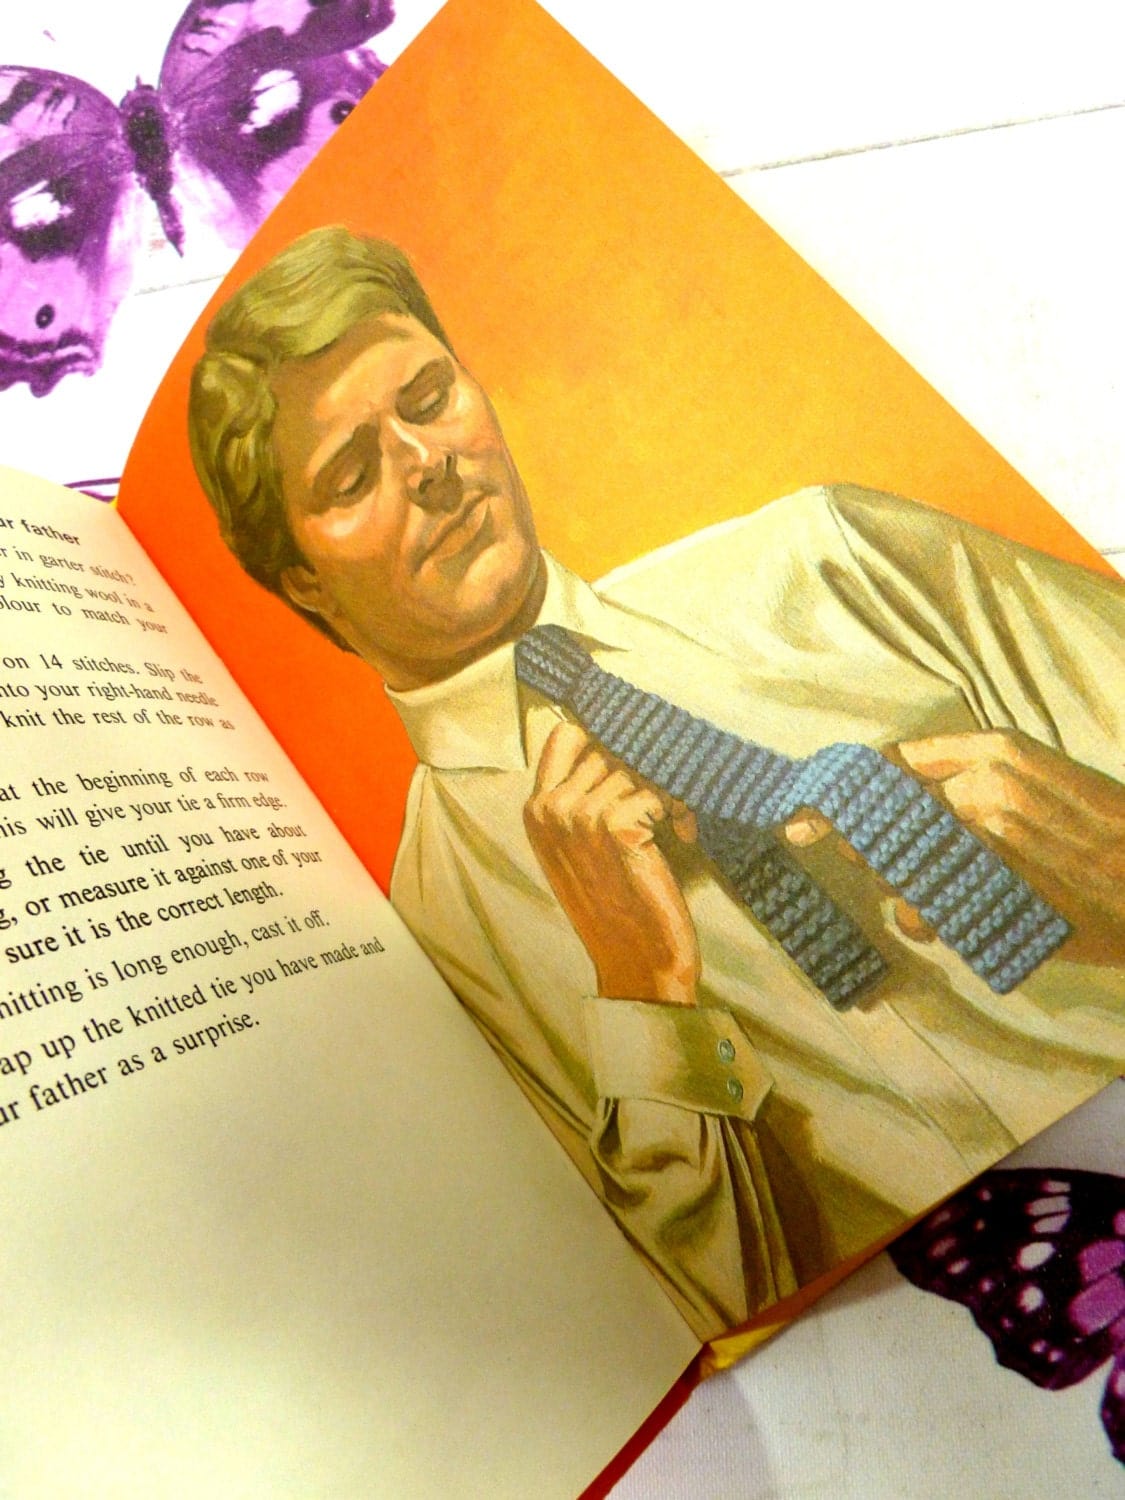 Dad in knitted Tie vintage ladybird book